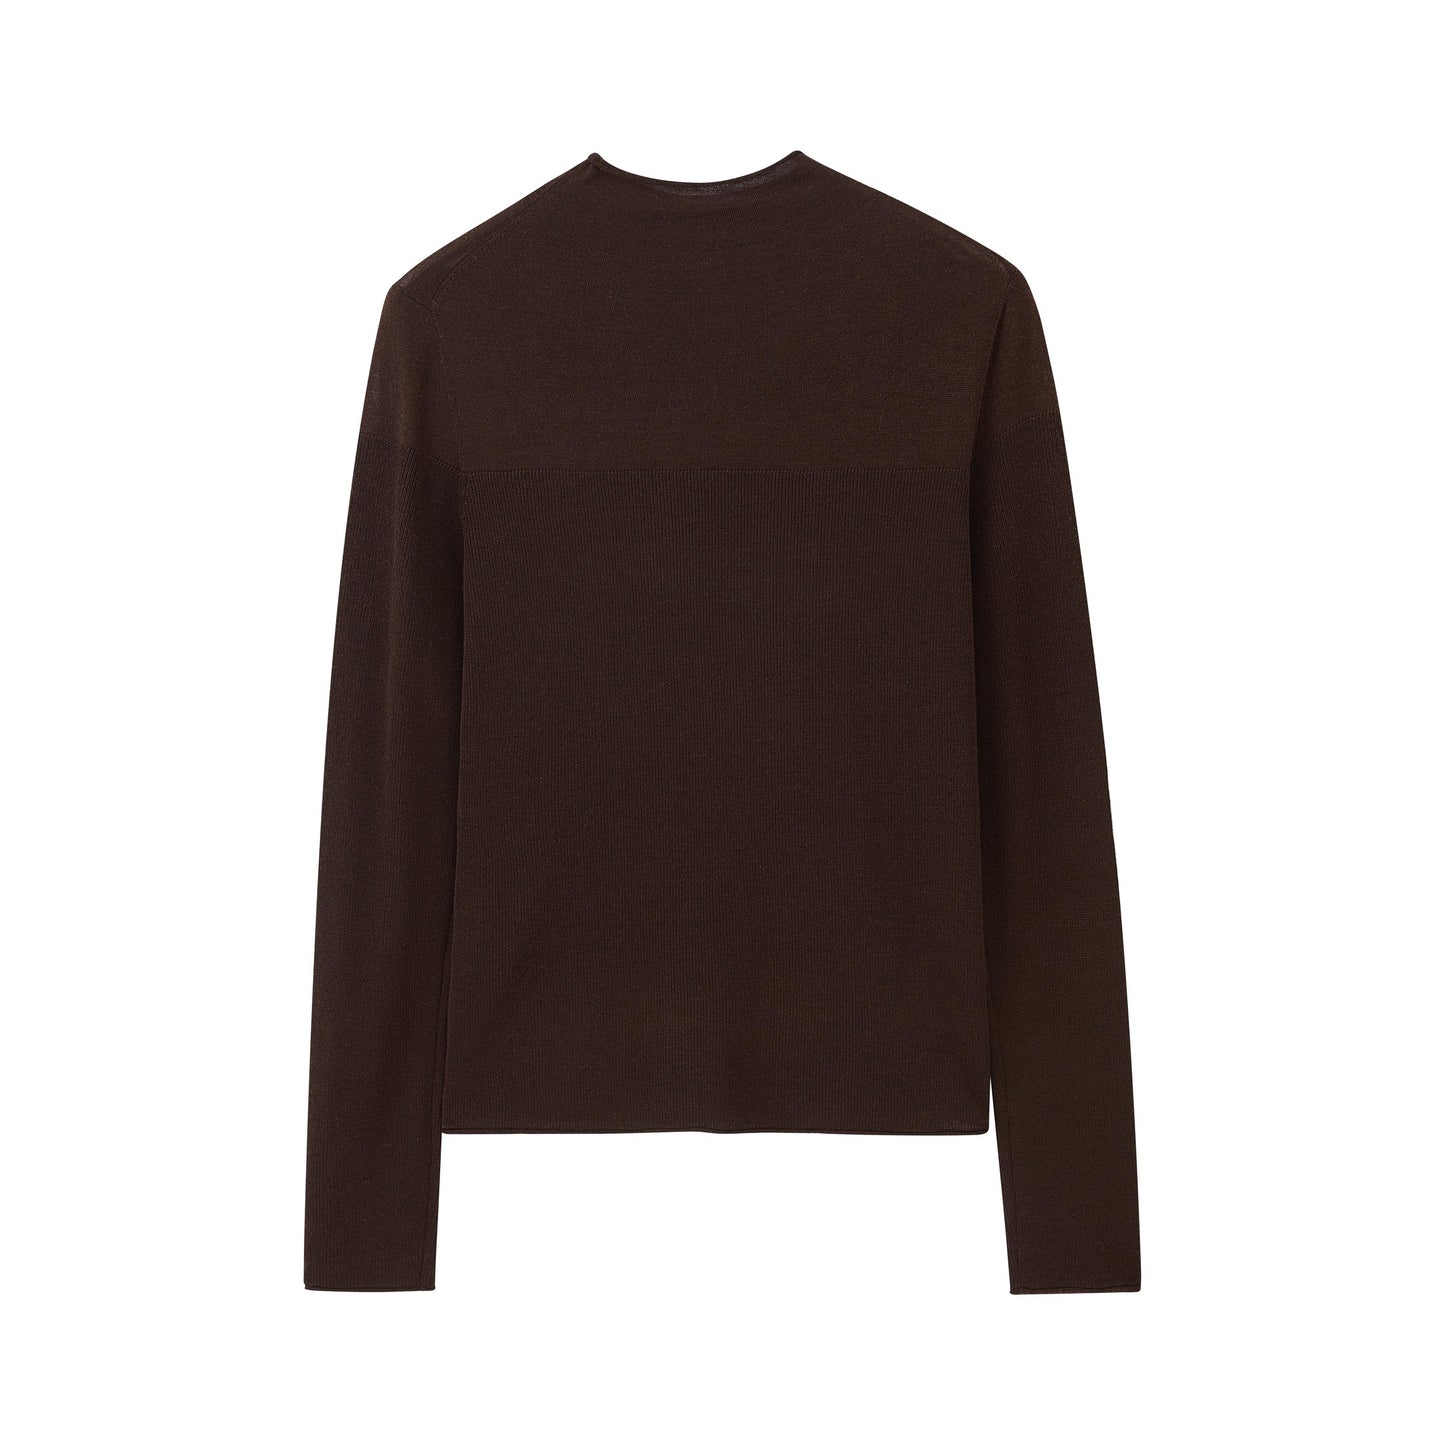 a brown silky wool mock neck sweater